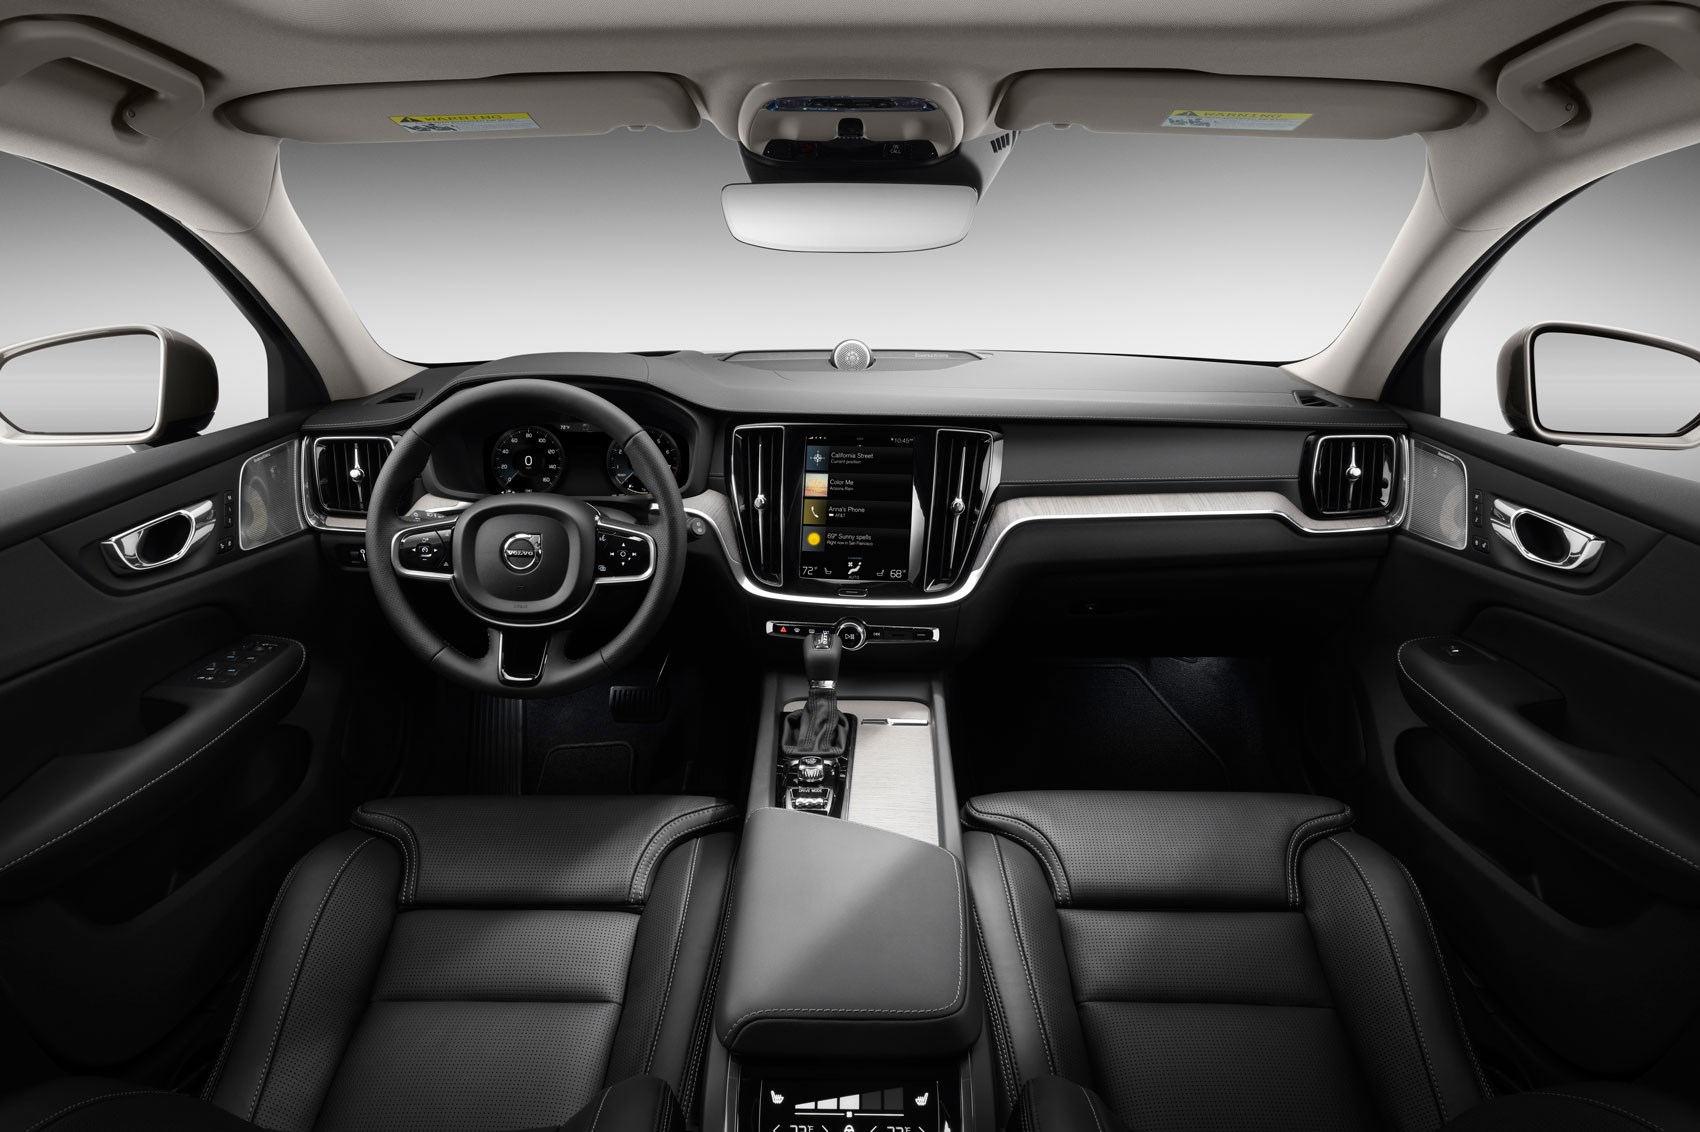 Volvo V60 estate (2018): interior, UK price and release ...